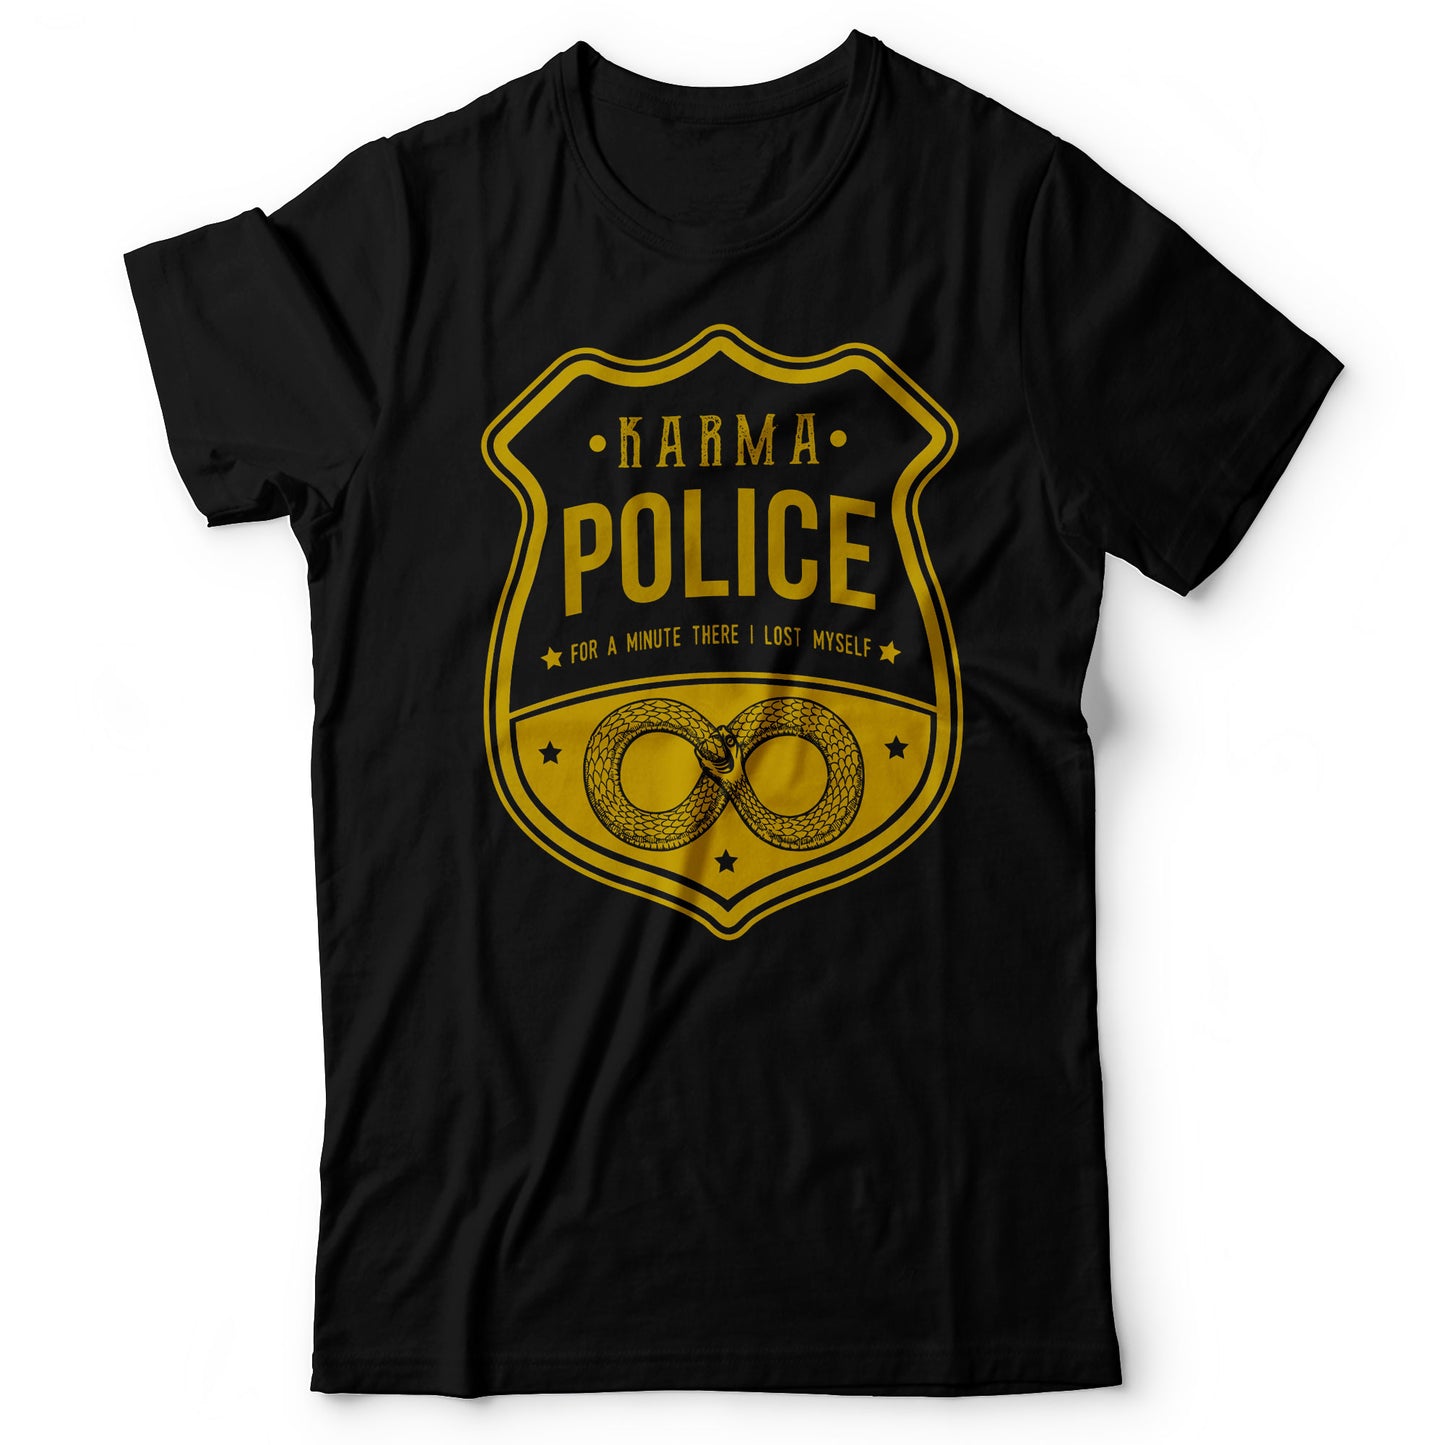 Radiohead - Karma Police - Men's T-shirt Black